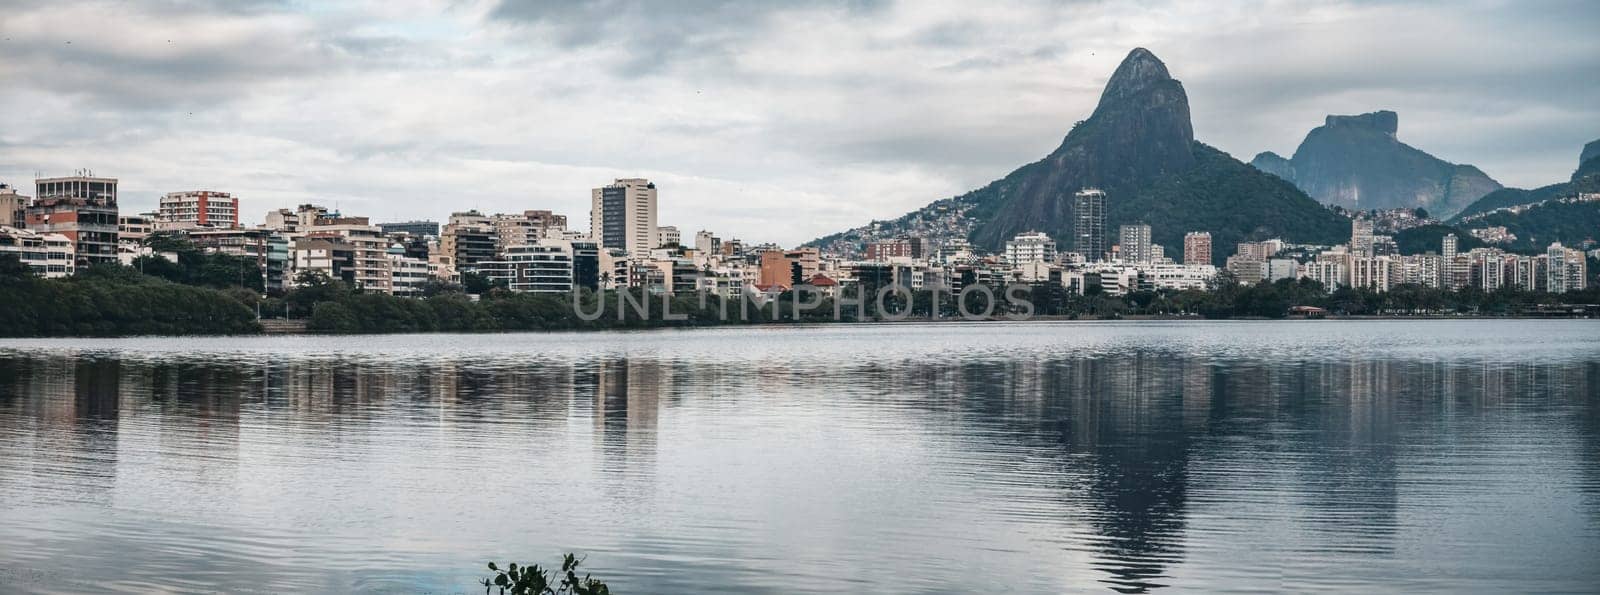 Sisters Enjoying Urban Vista with Pedra da Gavea in Rio de Janeiro by FerradalFCG